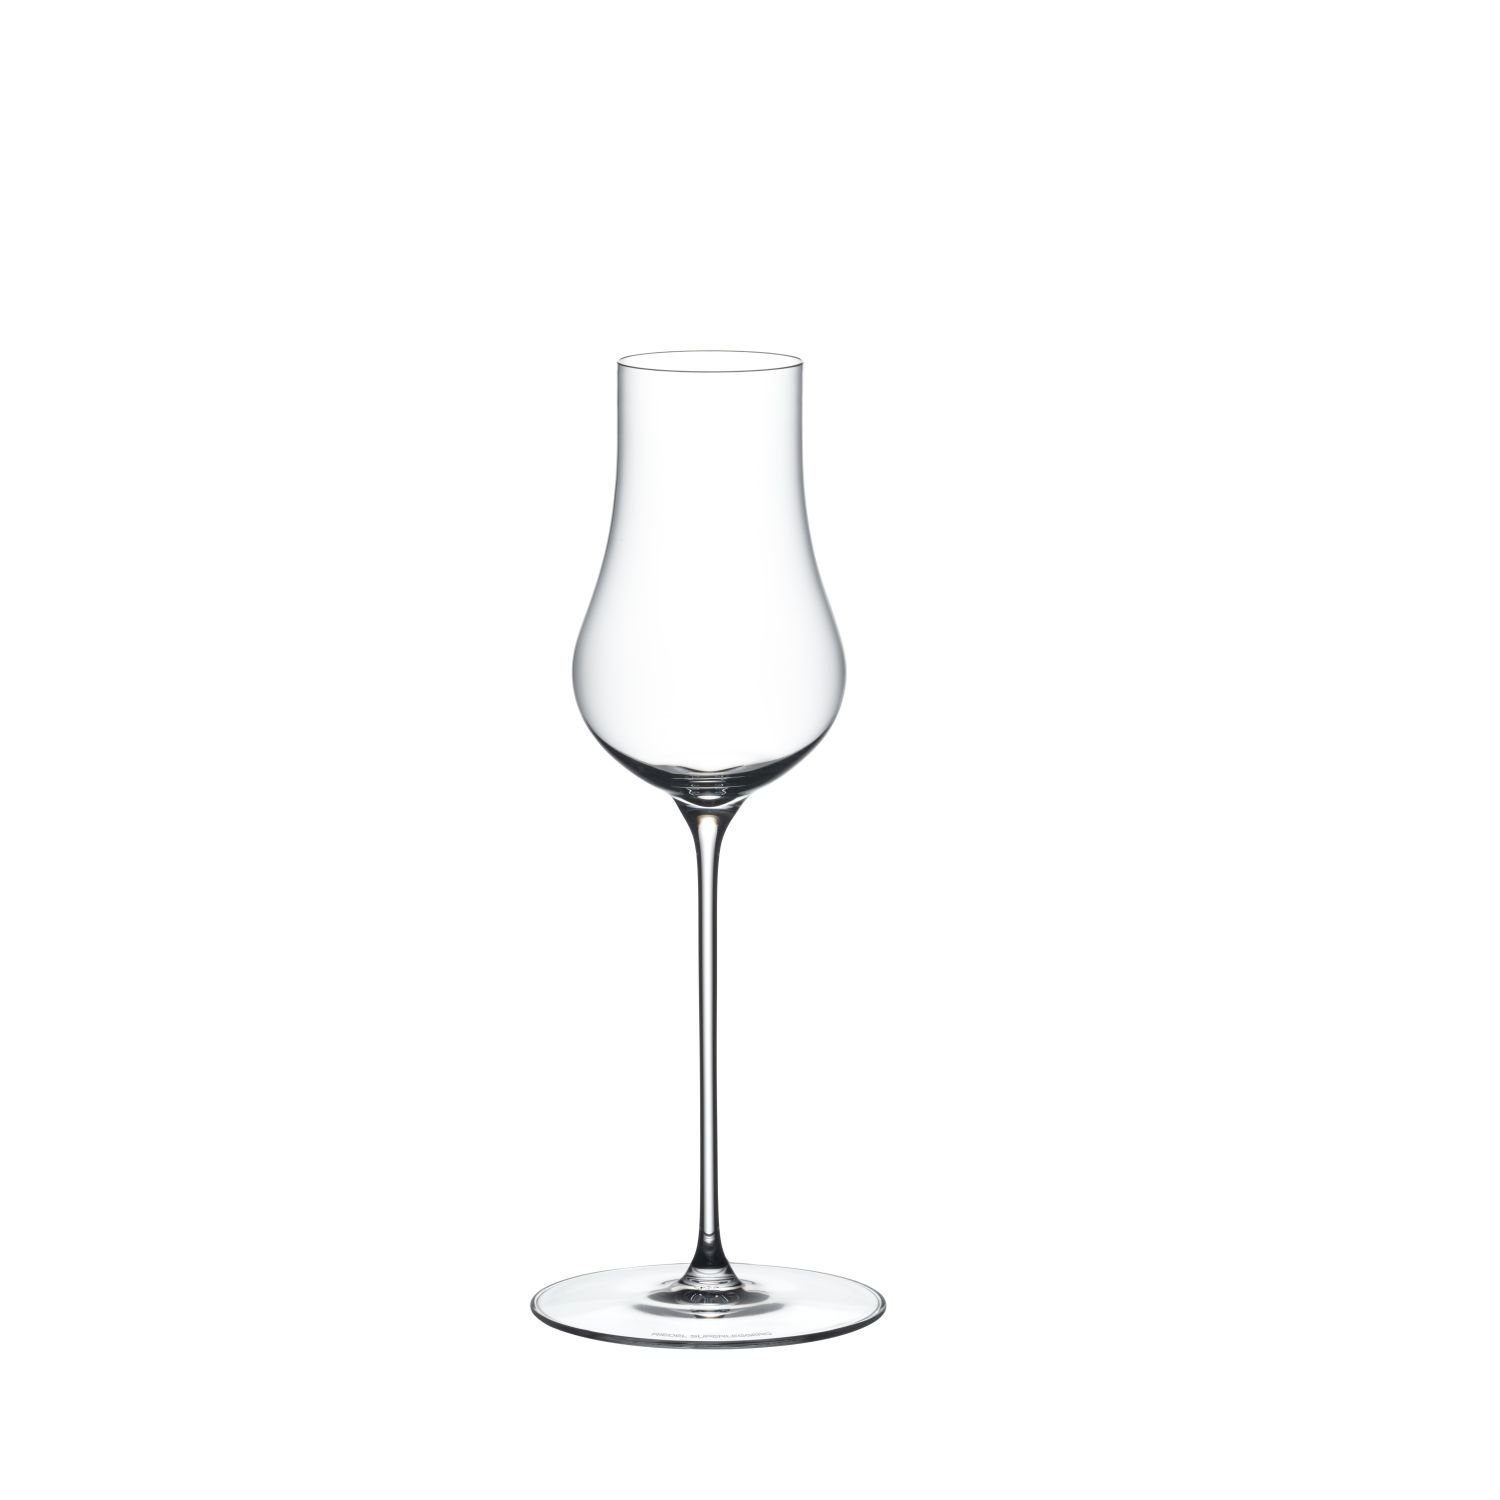 RIEDEL Glas Cognacglas Superleggero Spirits, Kristallglas, maschinengeblasen